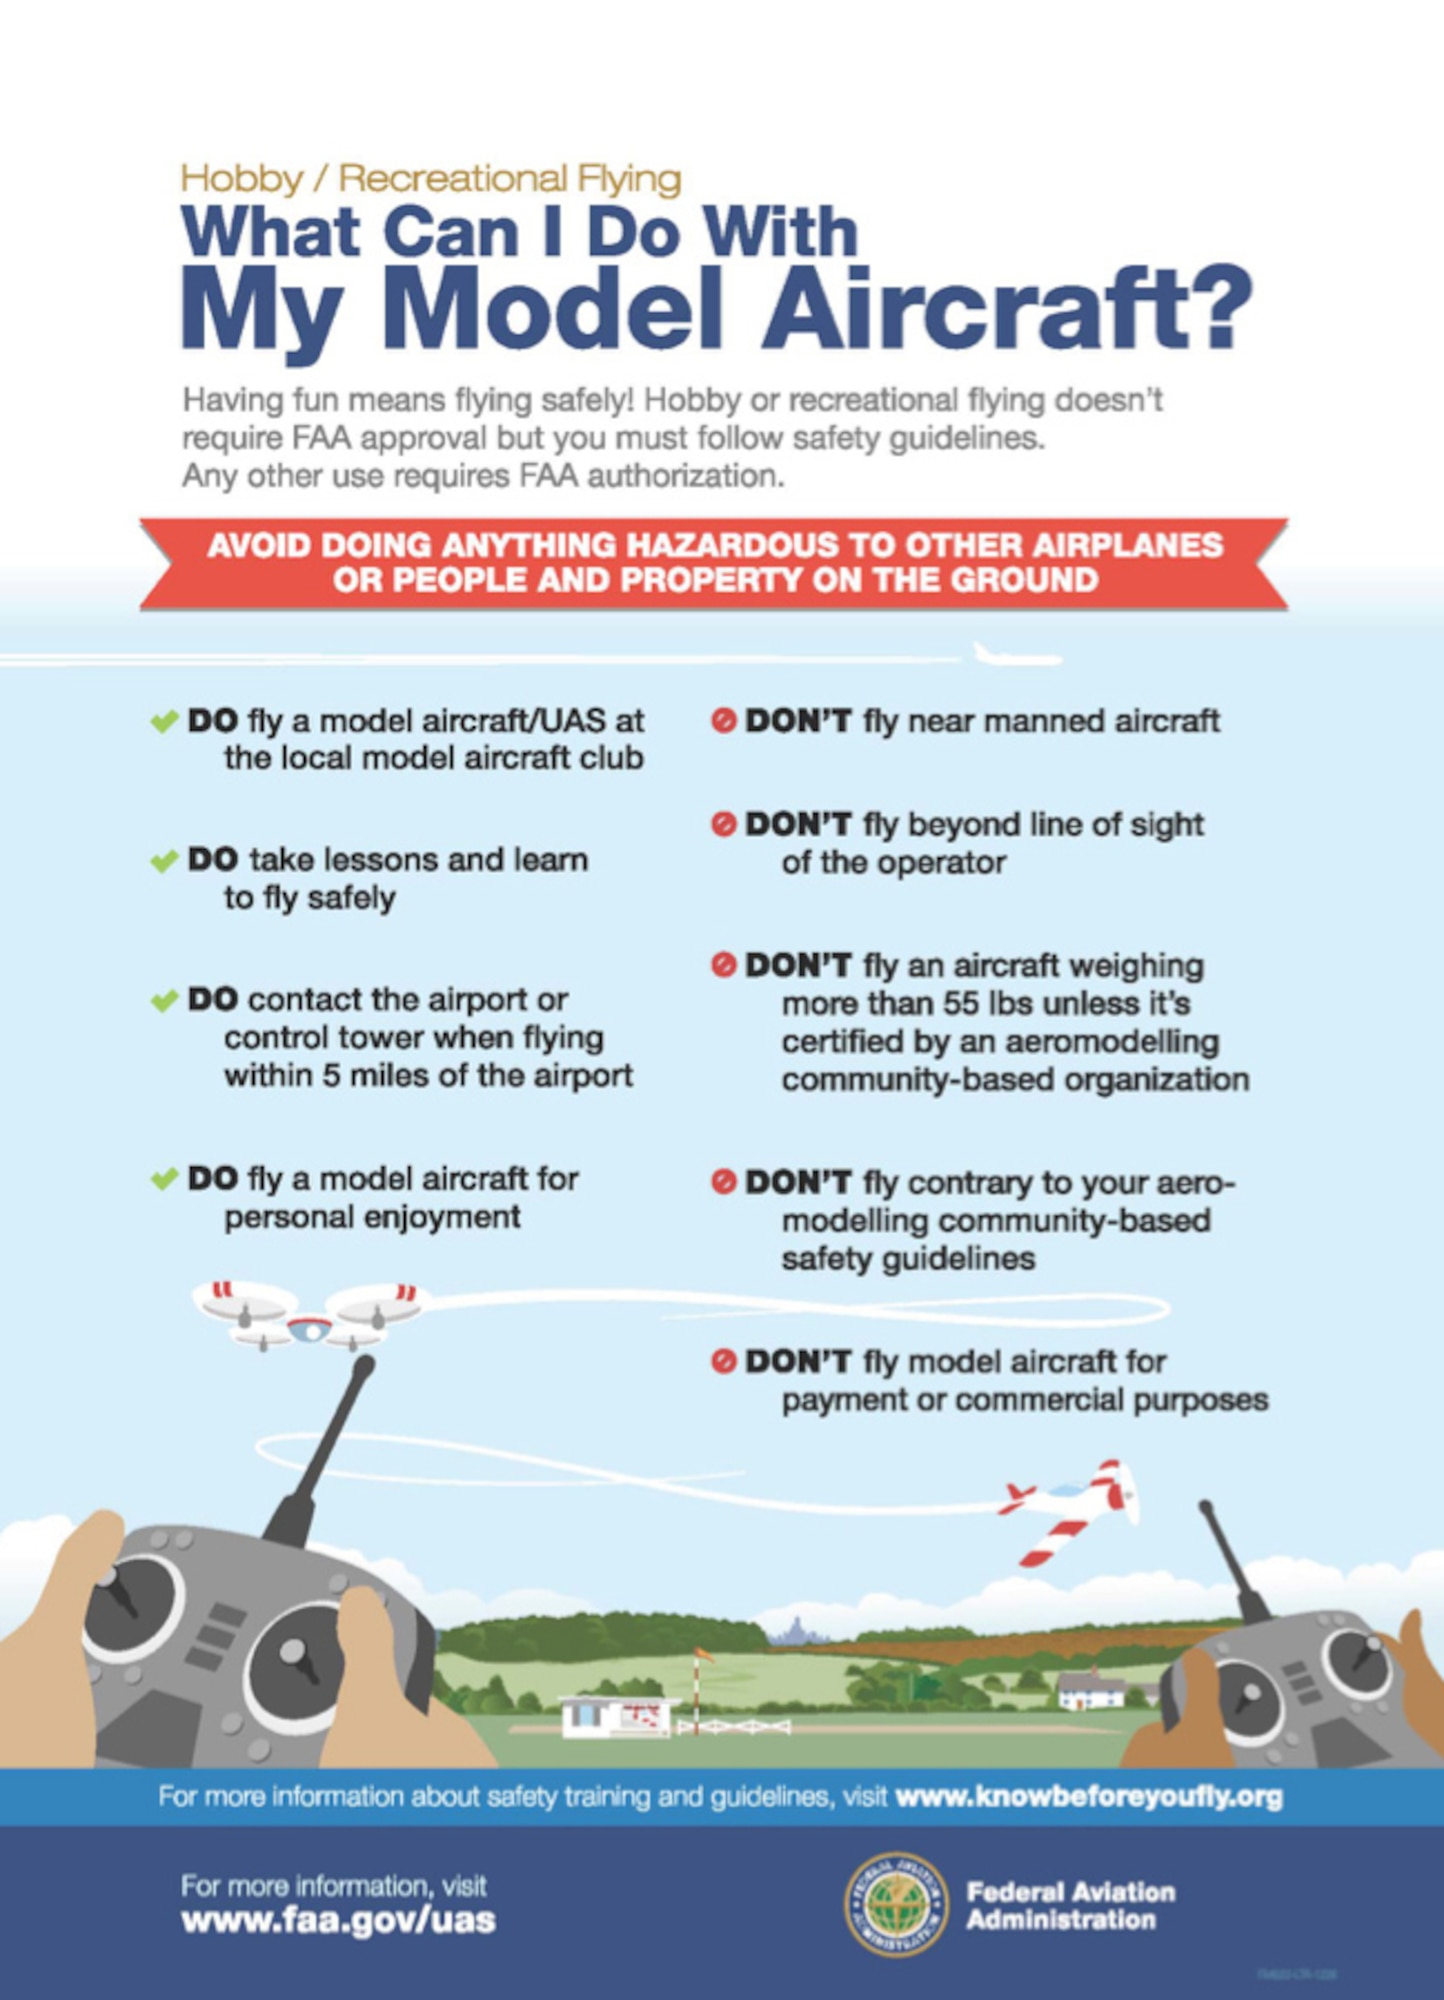 FAA model aircraft do's and don'ts